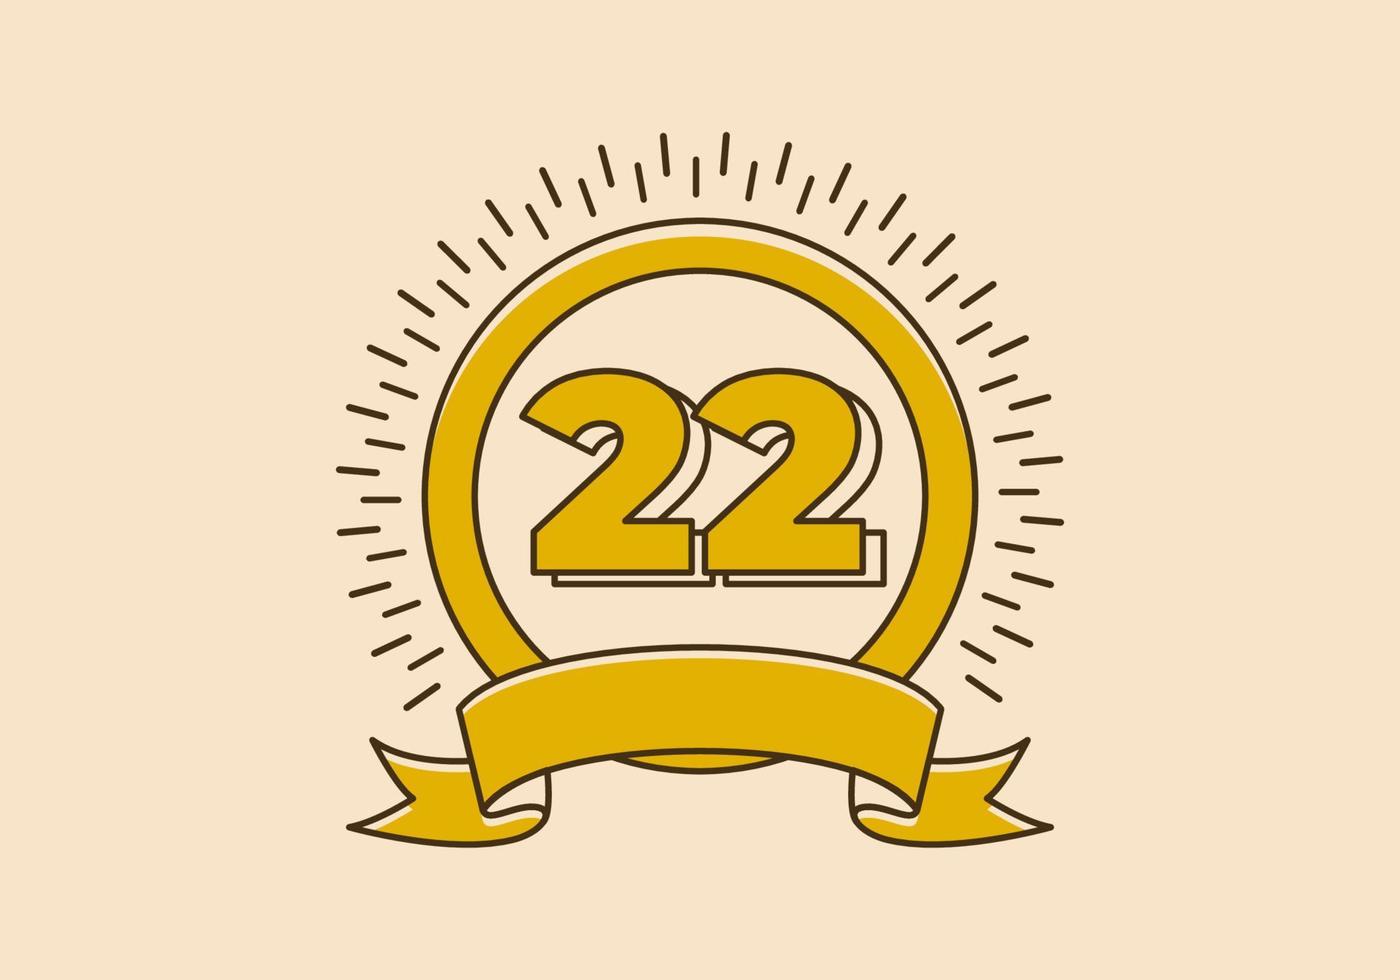 distintivo de círculo amarelo vintage com o número 22 nele vetor